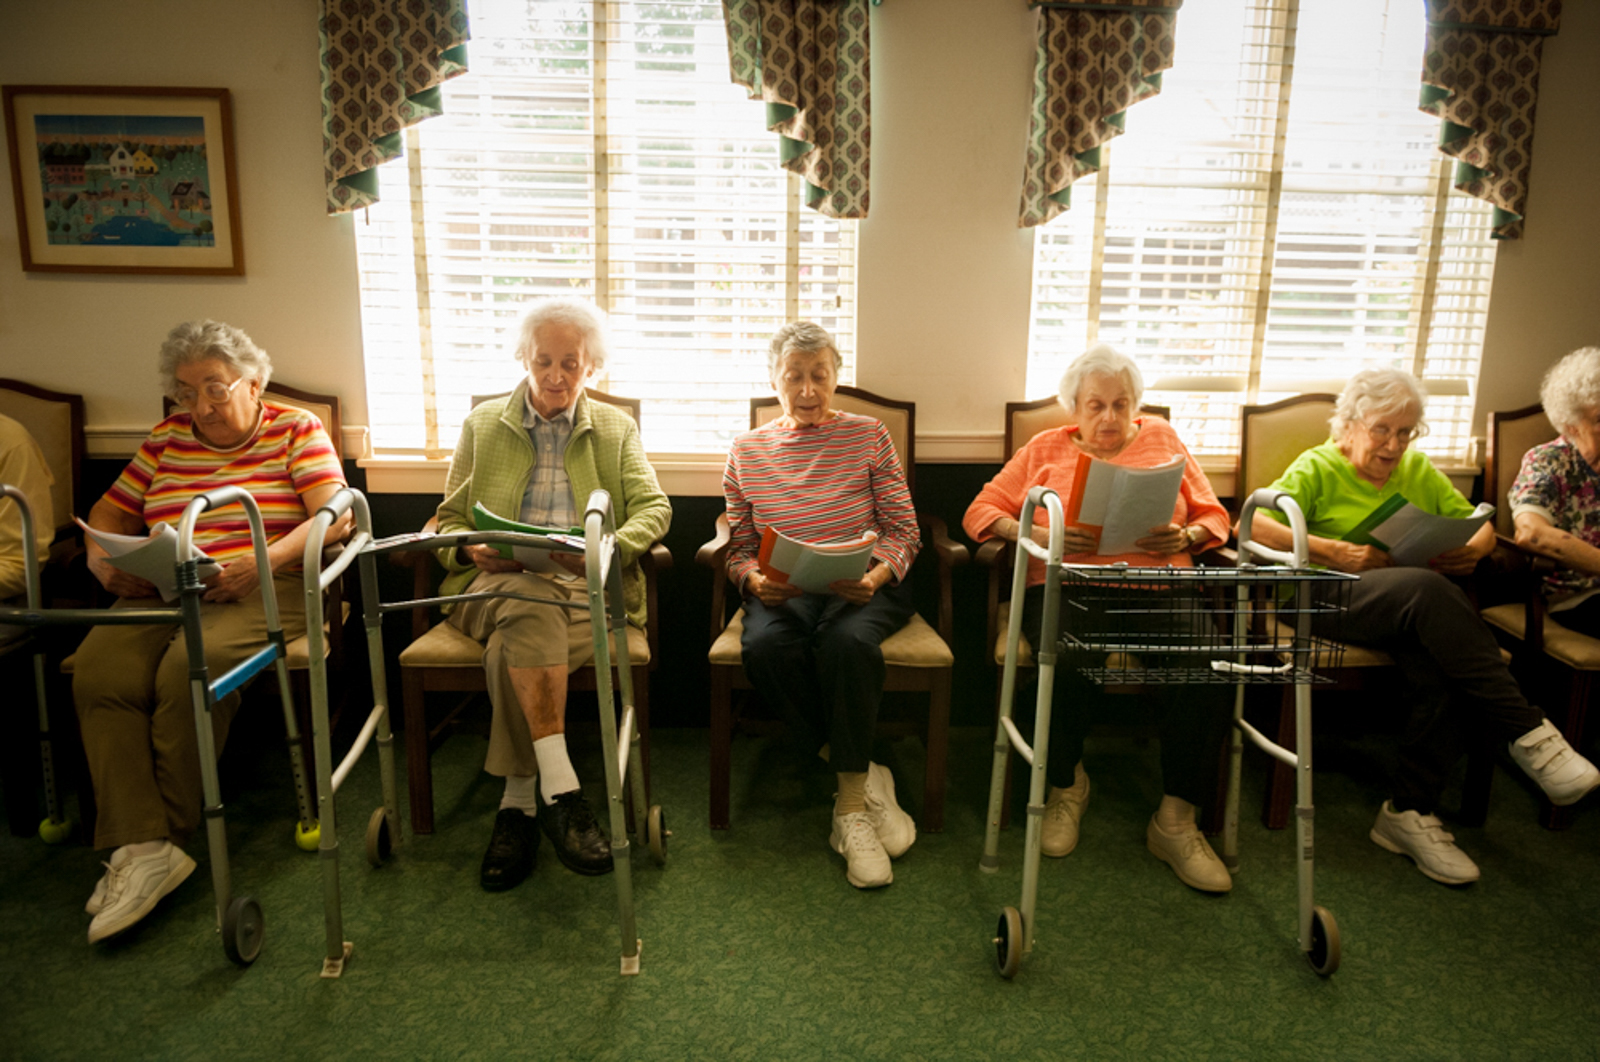 Group of elderly women sitting in cozy room reading